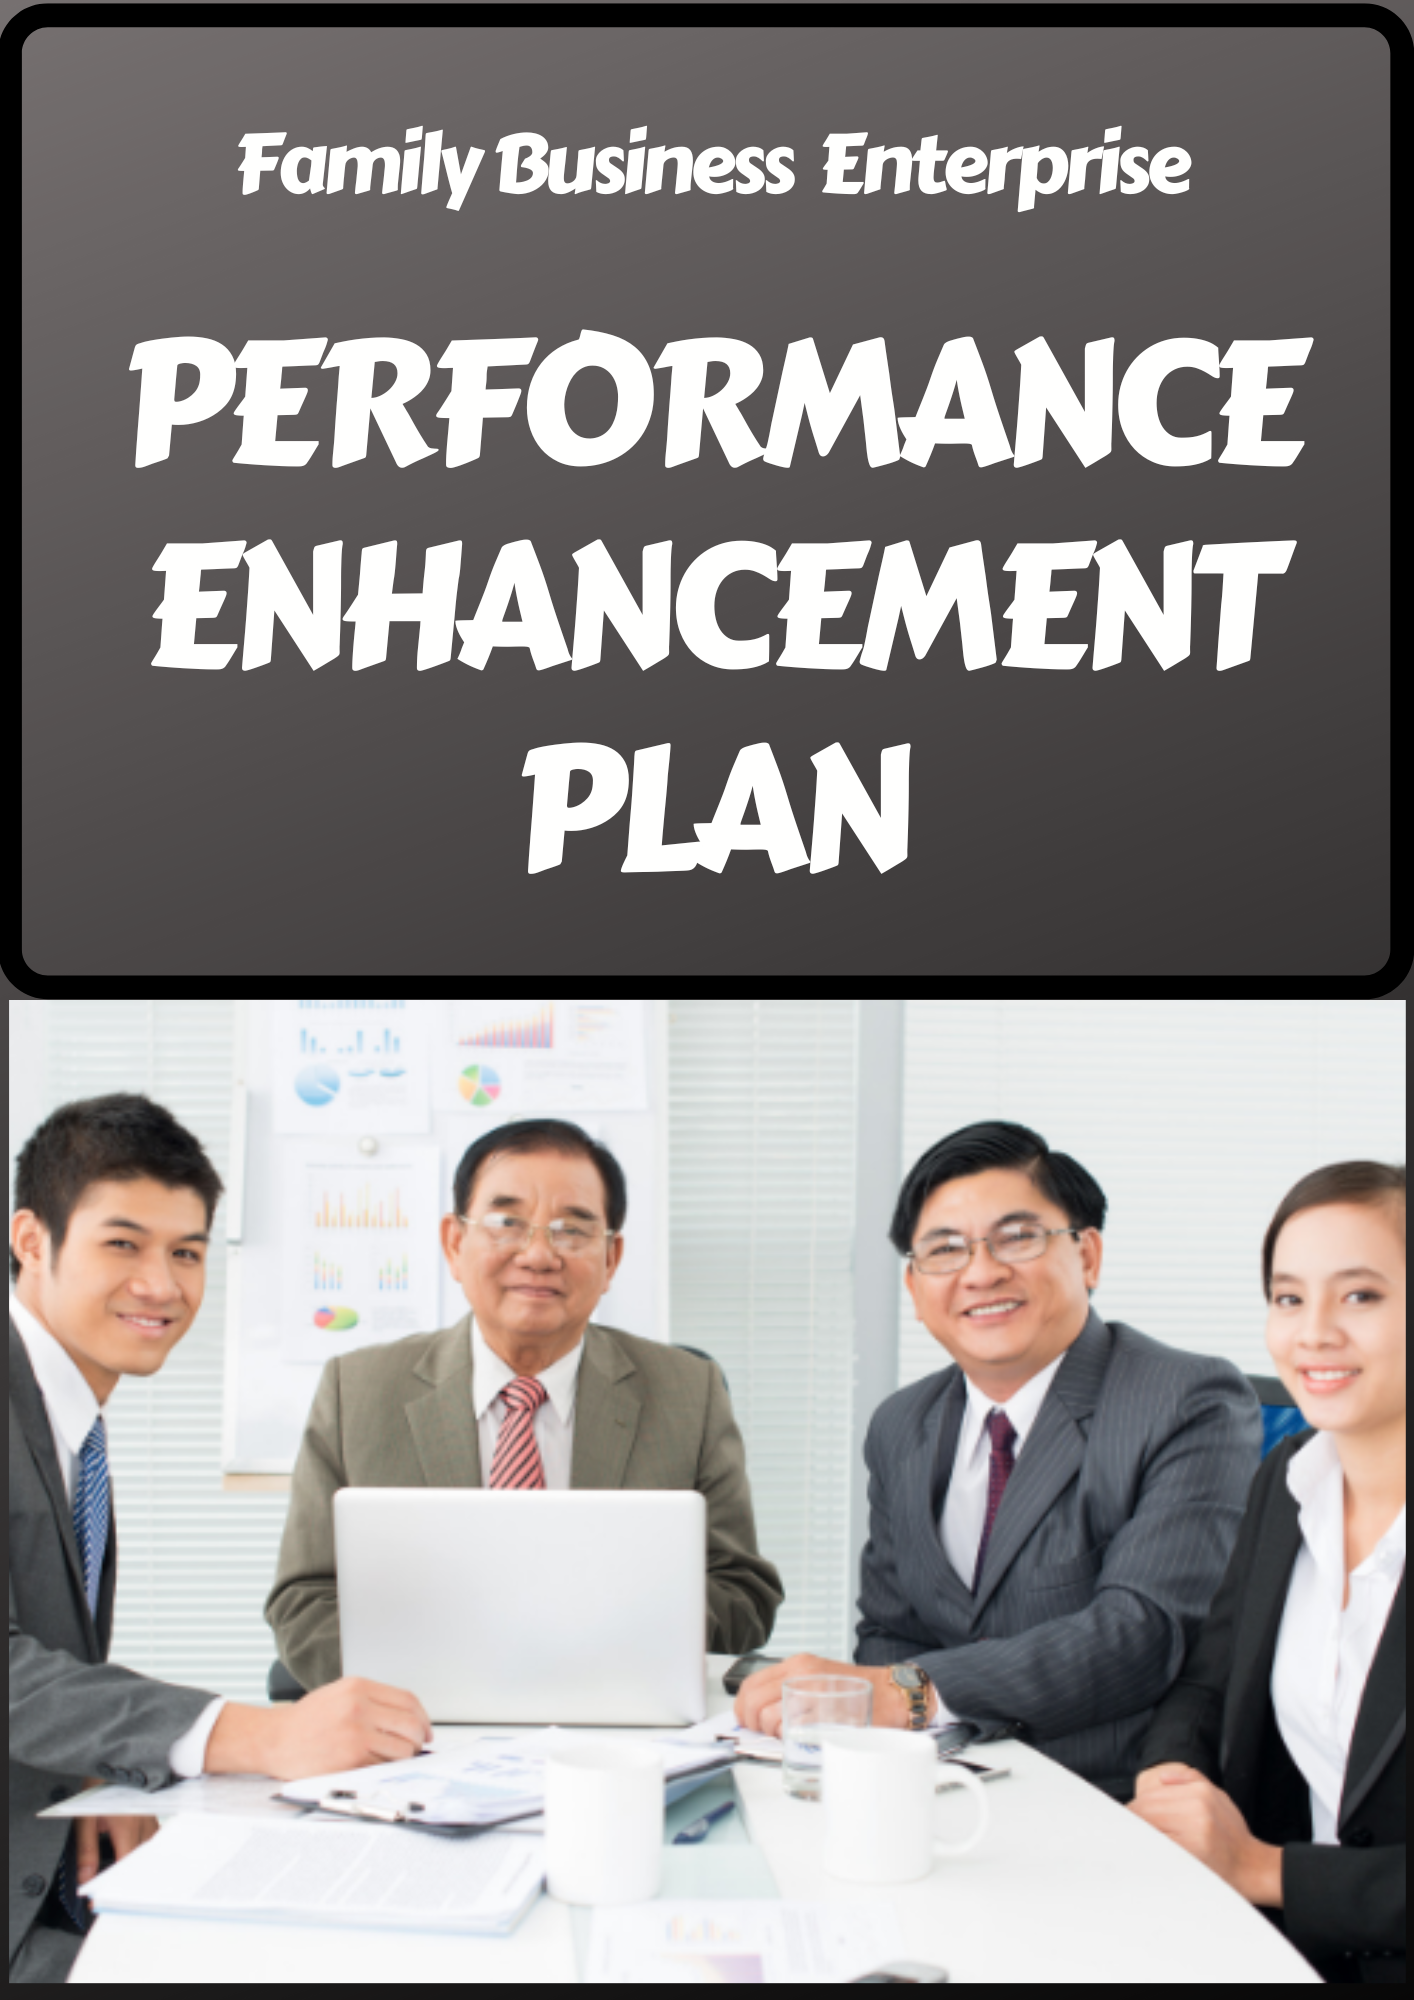 Family Business Enterprise Performance Enhancement Plan by FrankieKnowledge